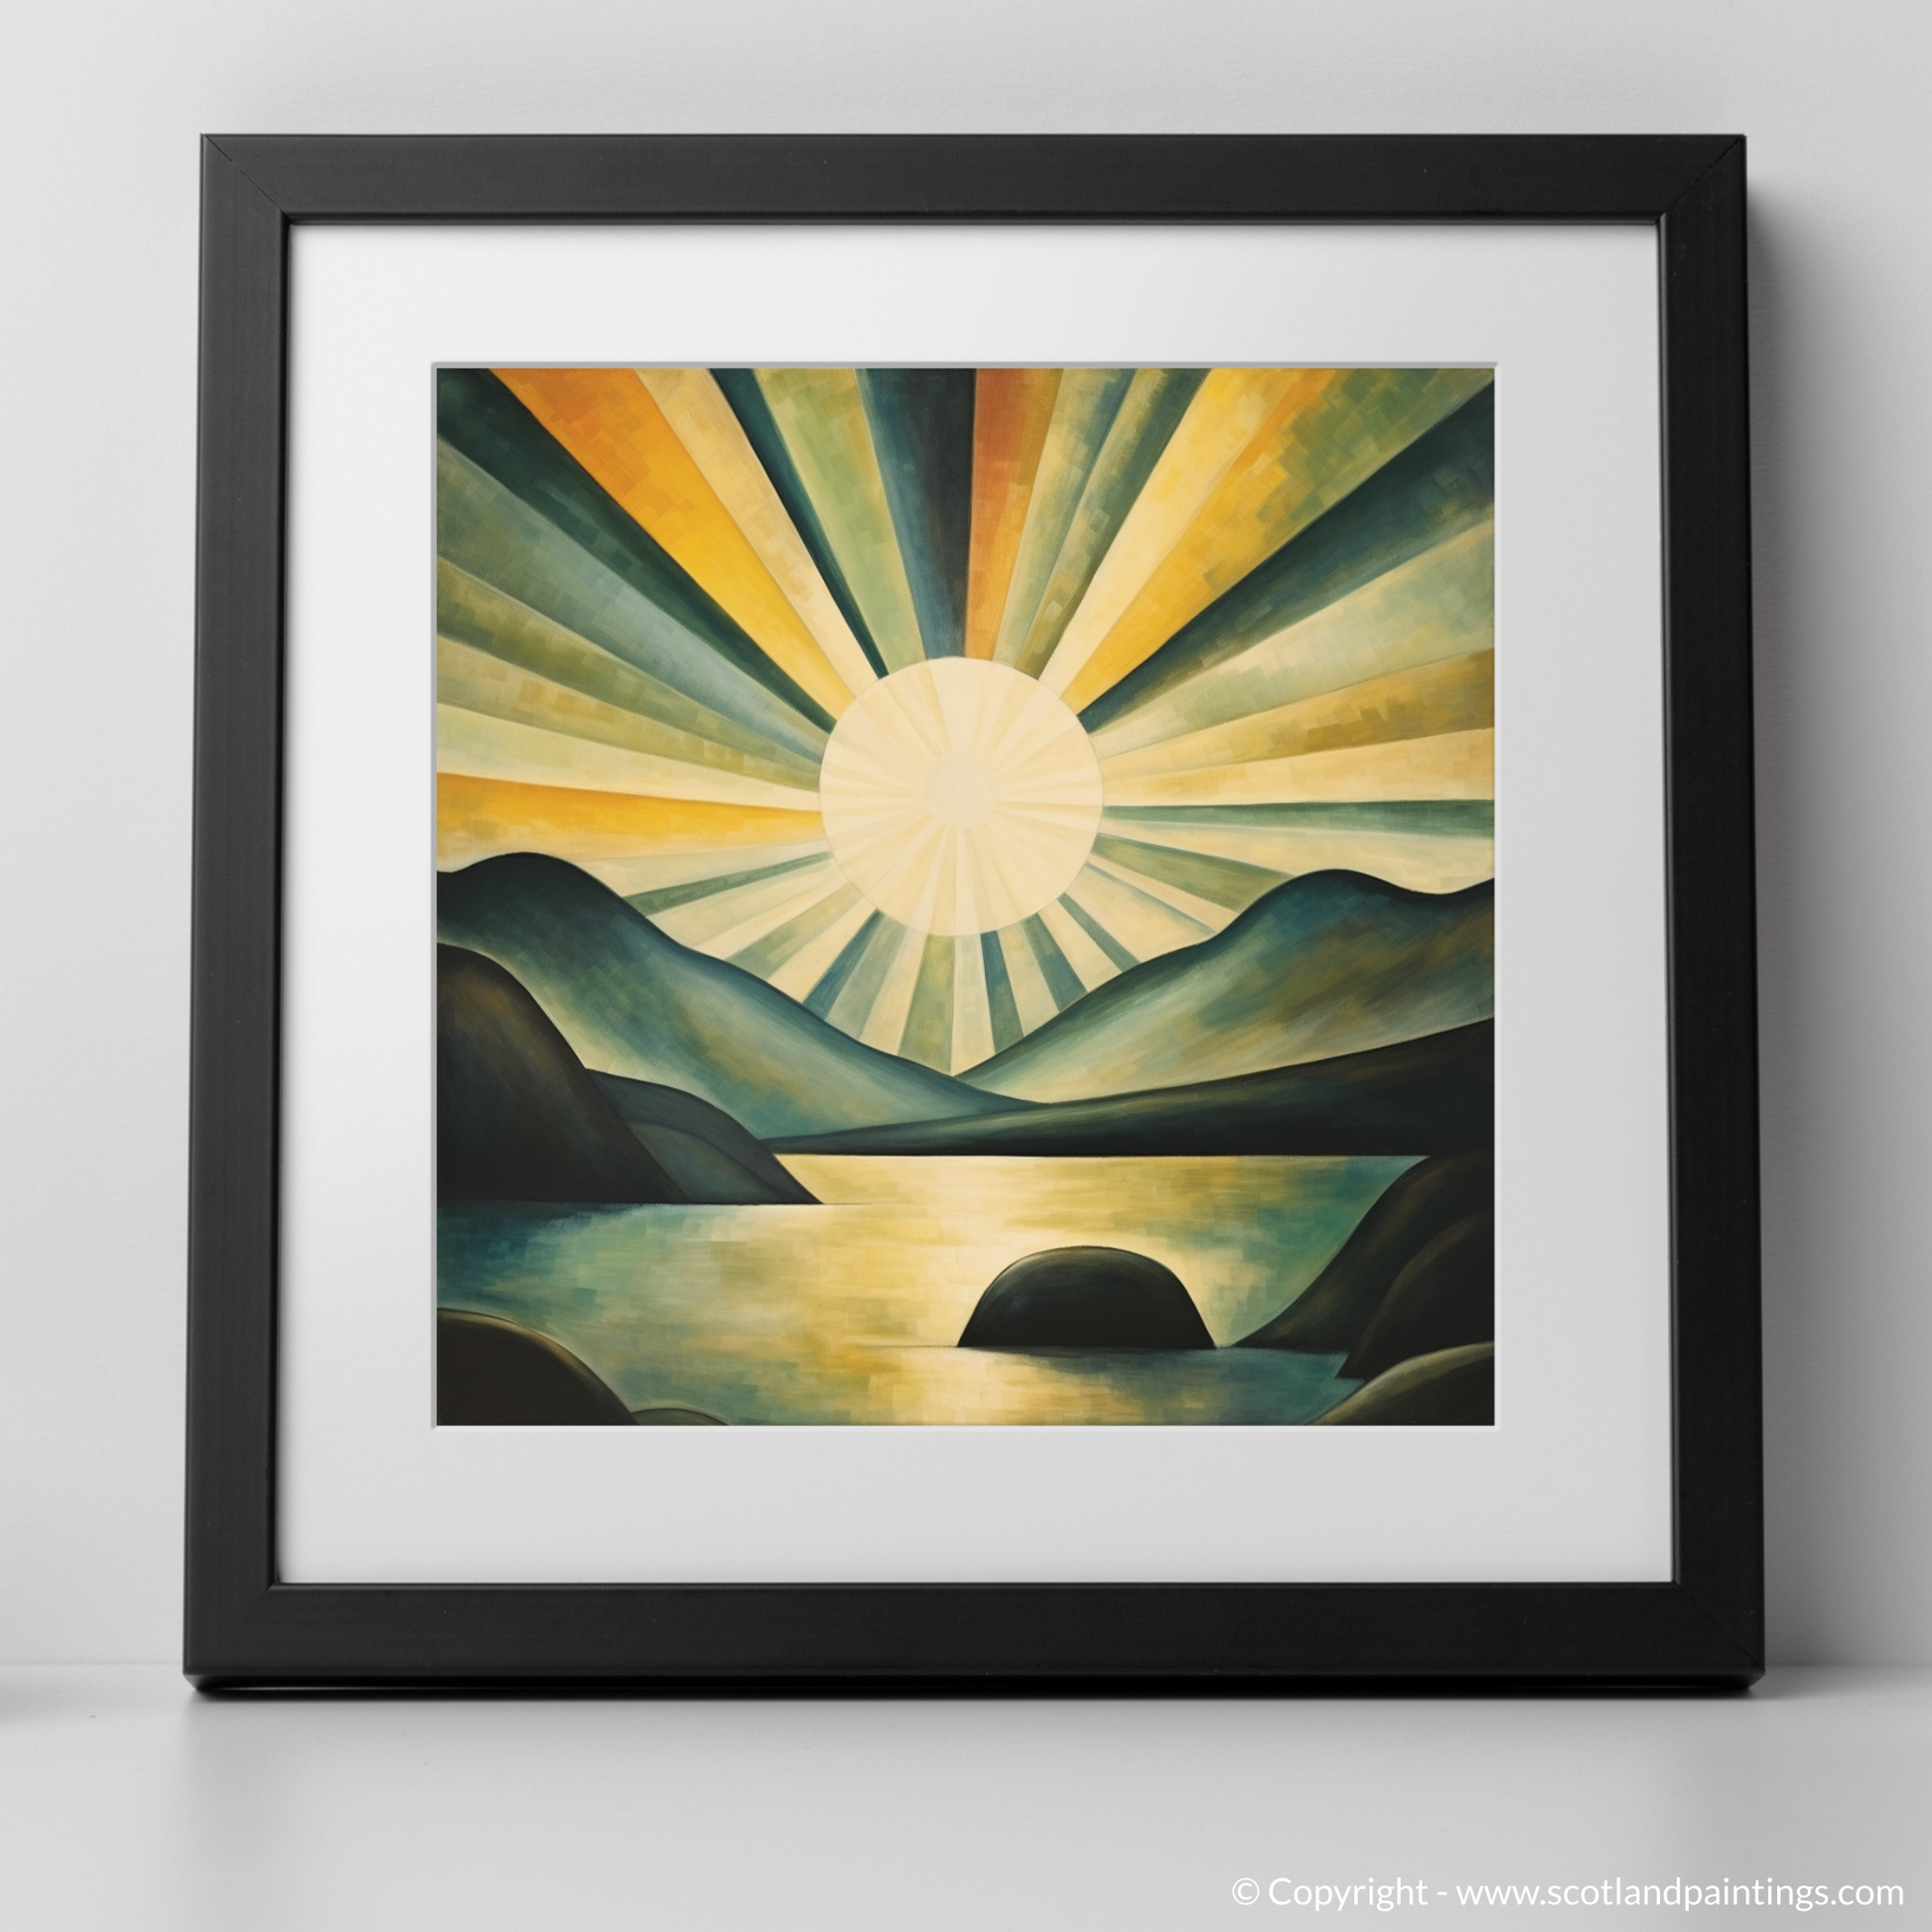 Art Print of Sunbeams on Loch Lomond with a black frame